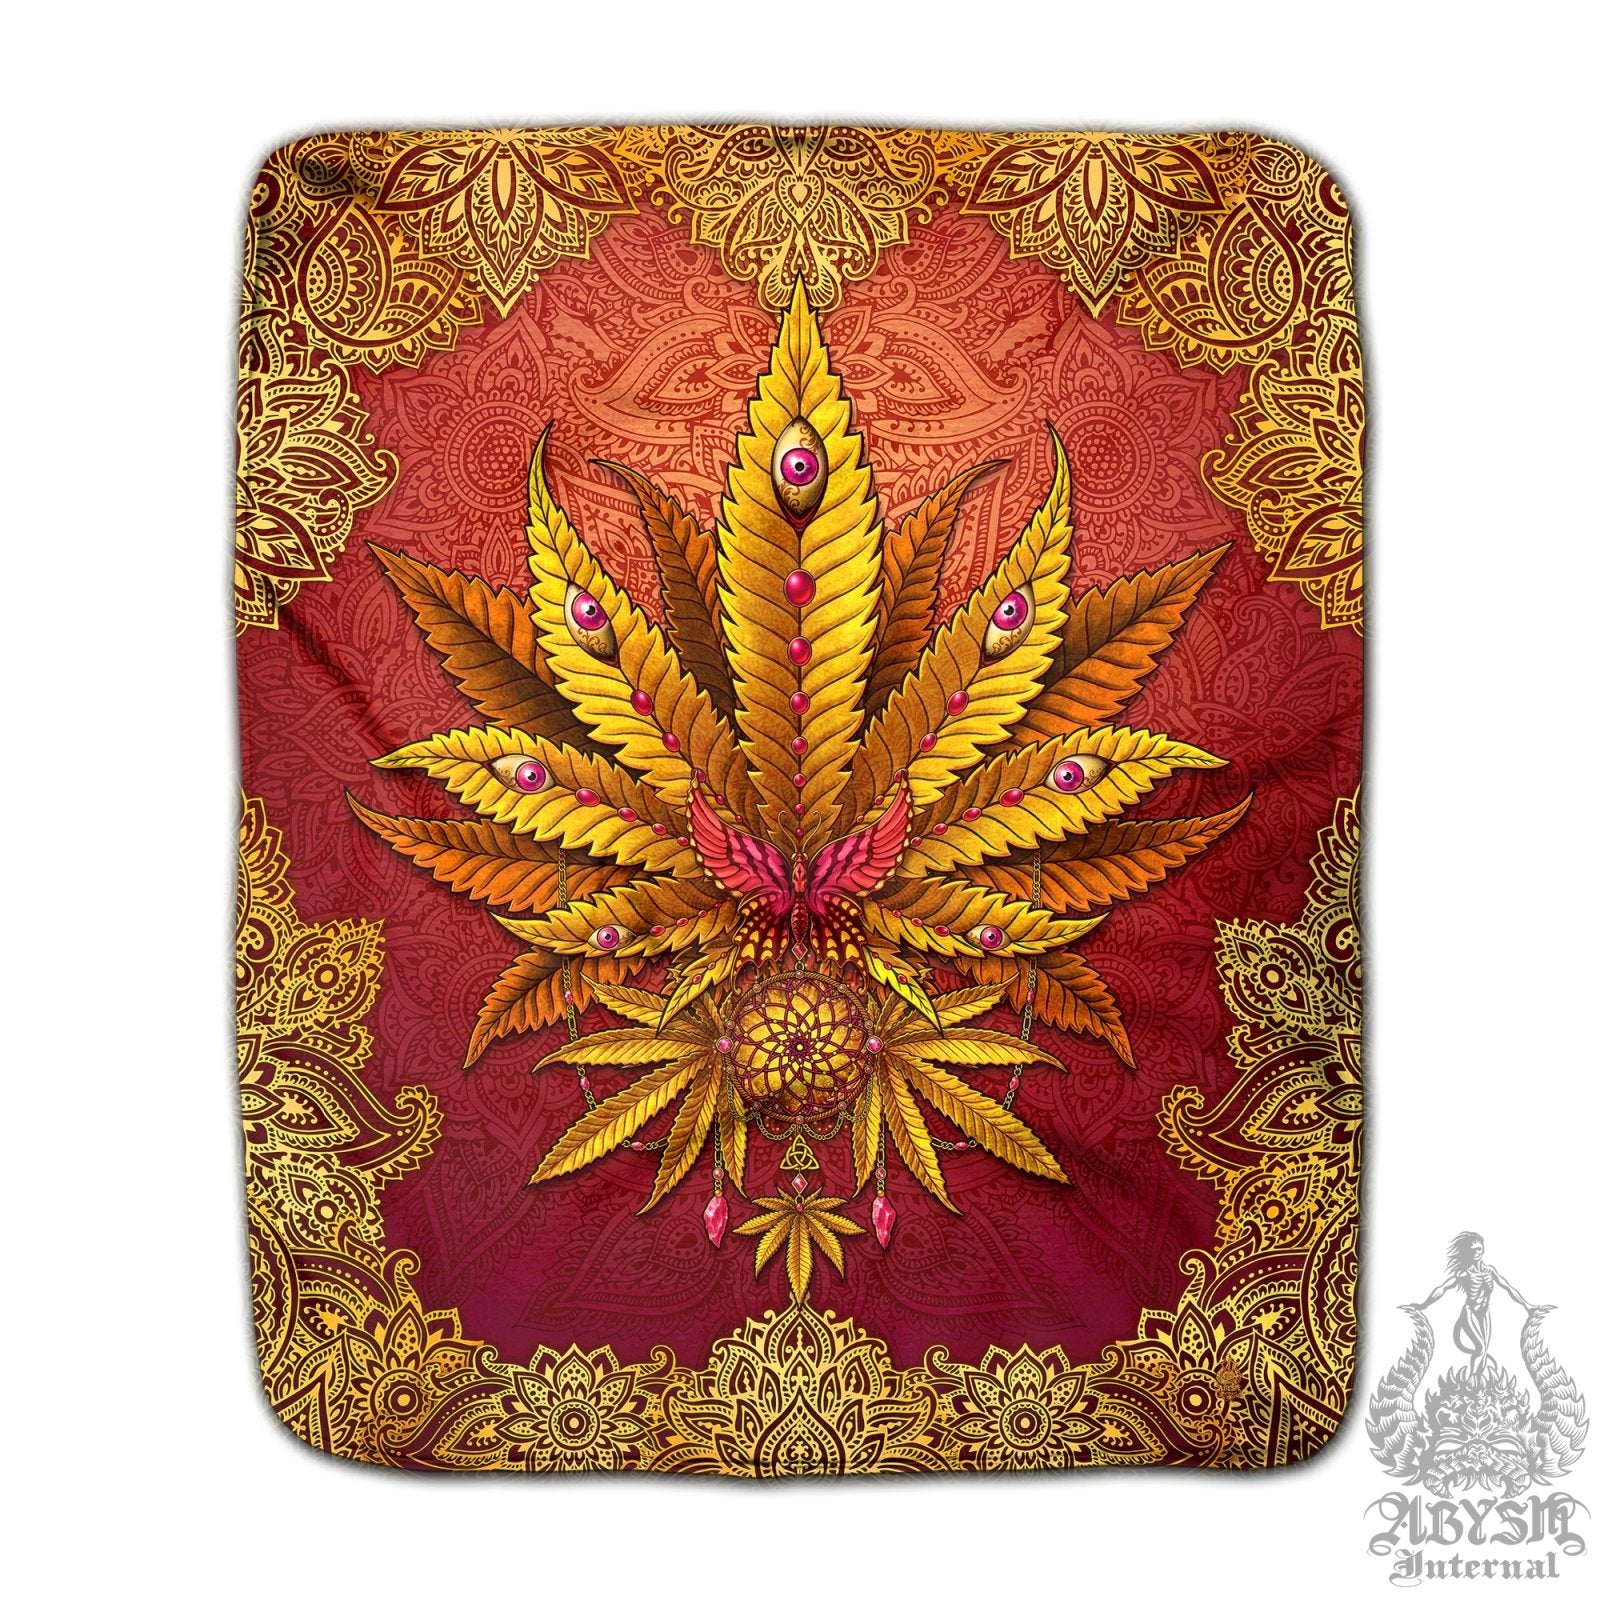 Boho Weed Throw Fleece Blanket, Cannabis Art, Indie and Hippie Home Decor, Bohemian 420 Gift - Marijuana, Mandalas - Abysm Internal